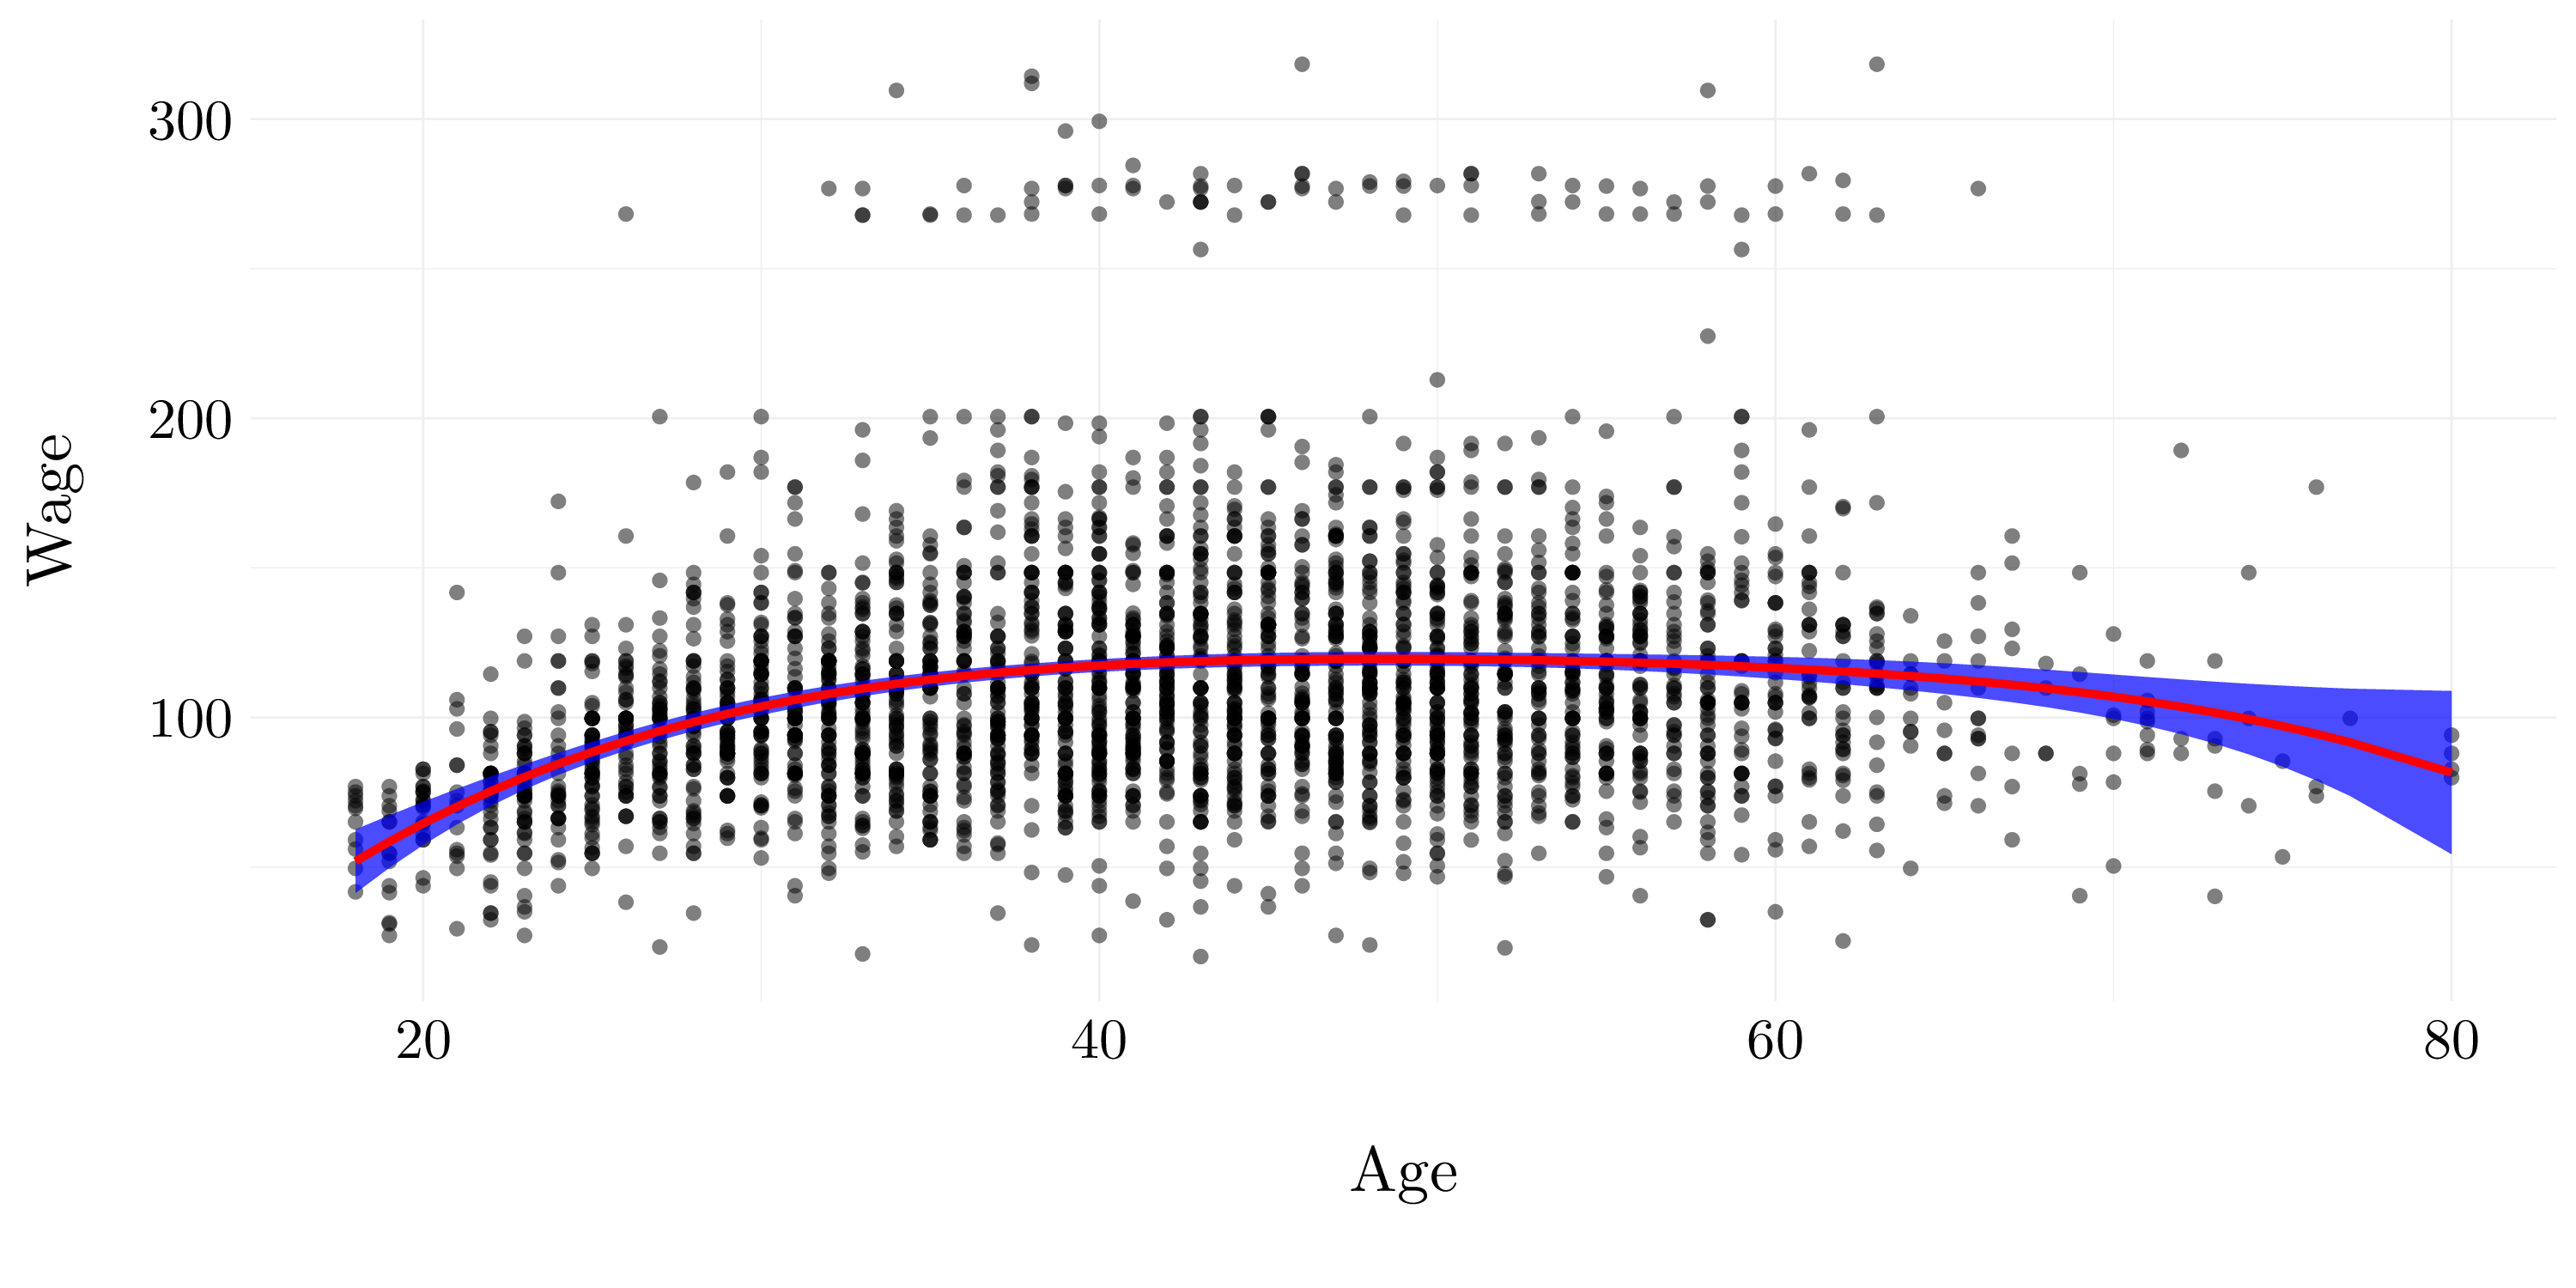 Quadric polynomial model.